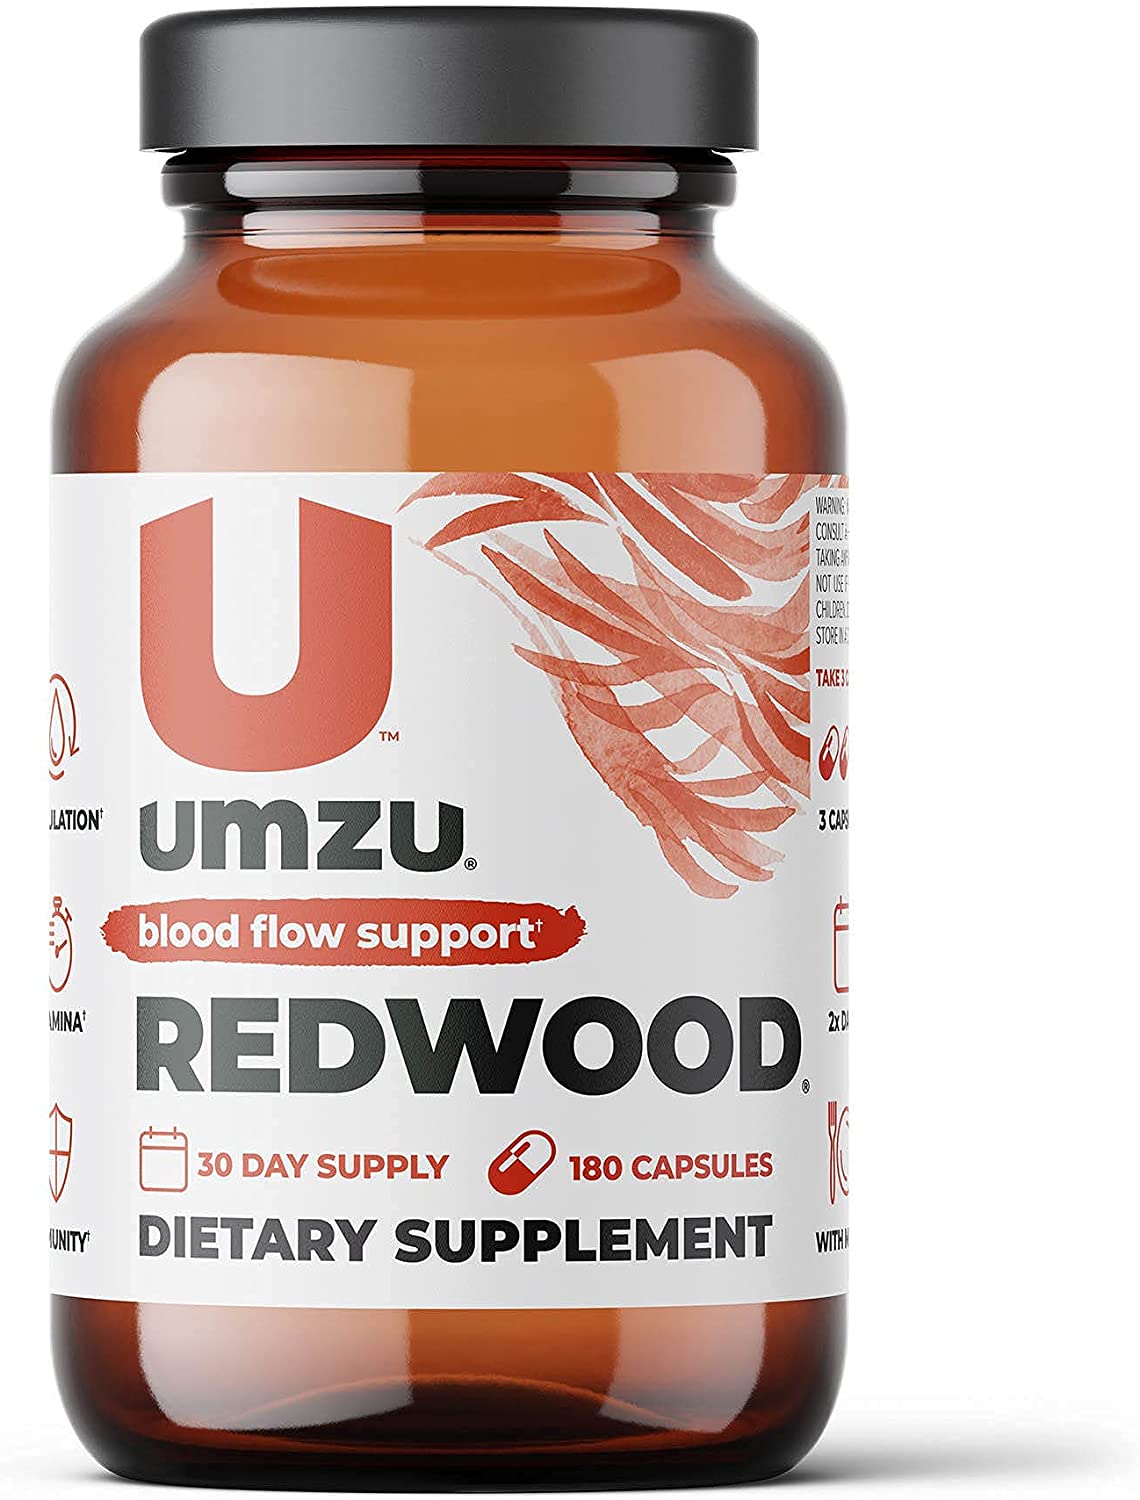 umzu redwood review